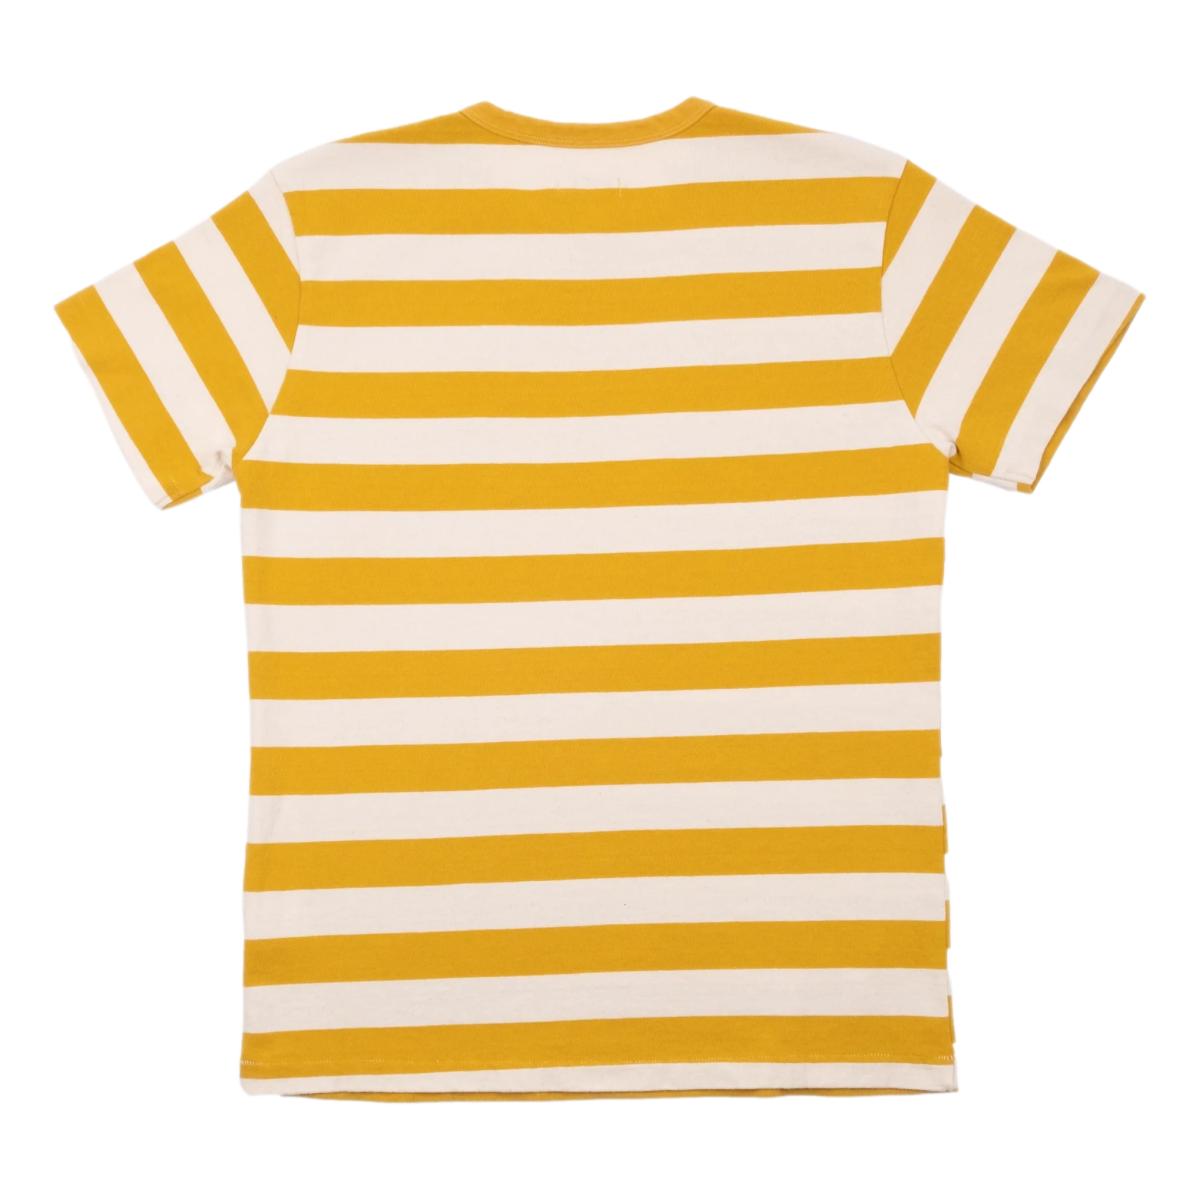 Shifter S/S Tee Mustard Stripe - T Shirt